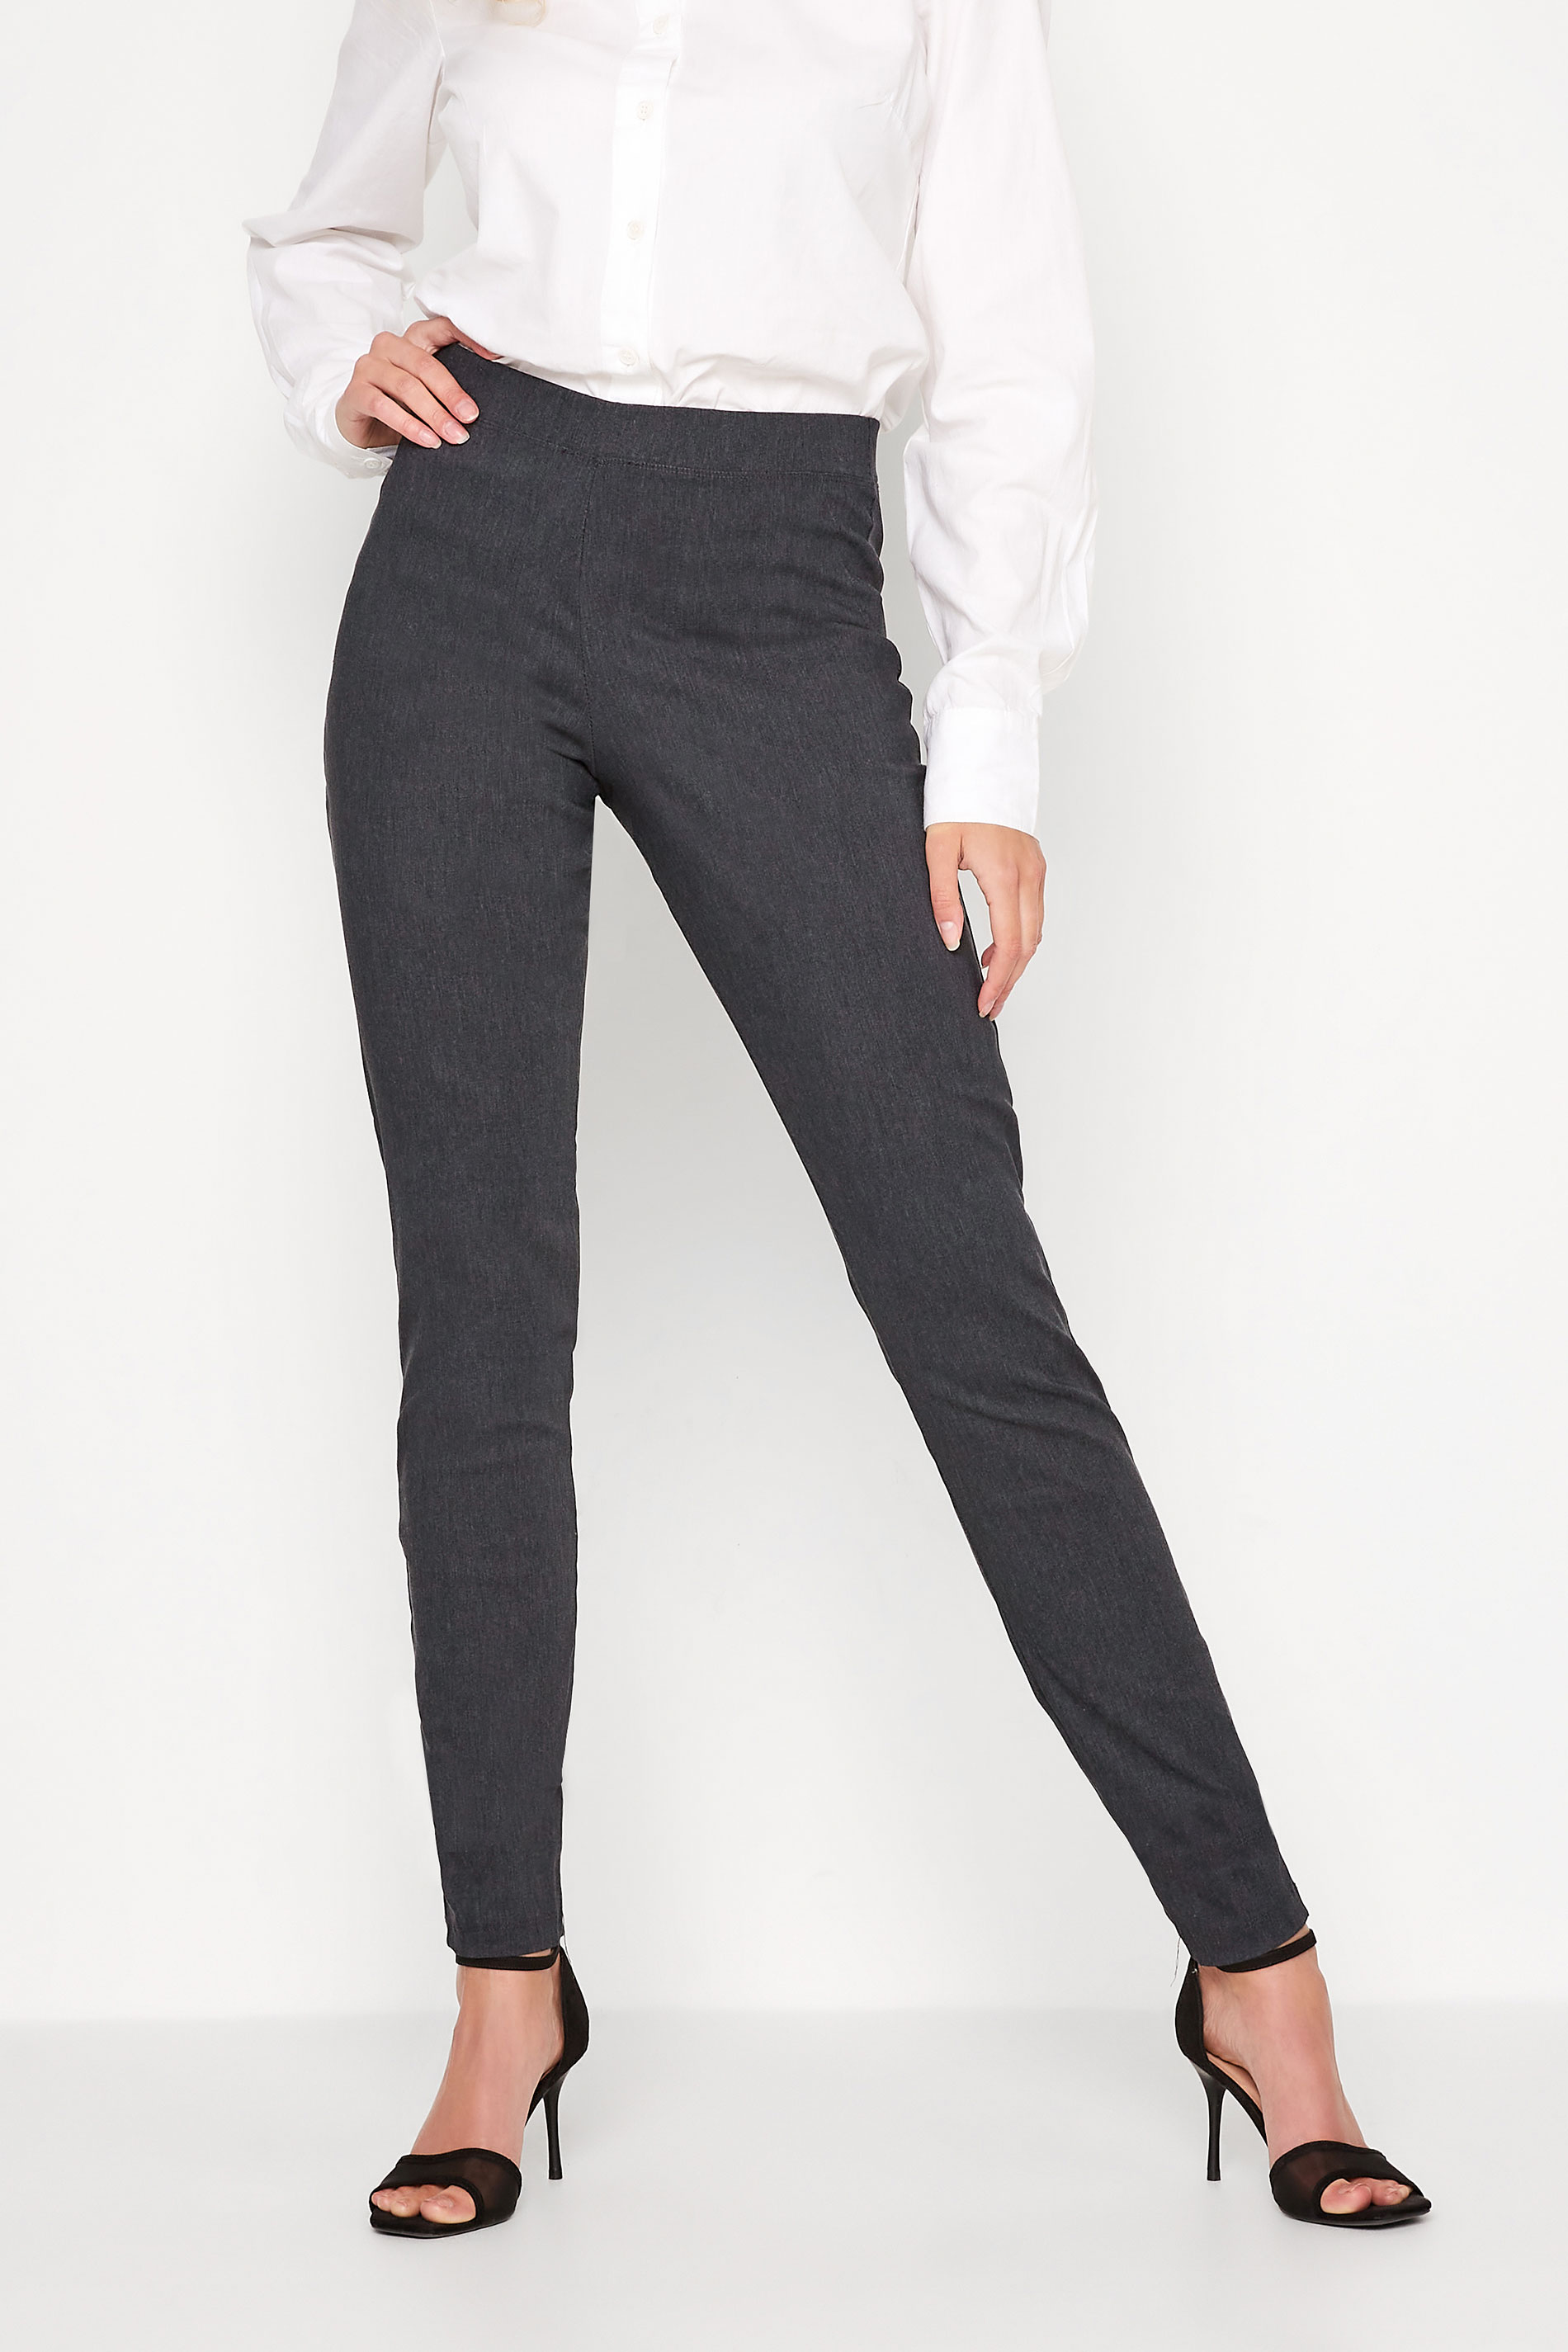 LTS Tall Grey Stretch Skinny Trousers | Long Tall Sally 1